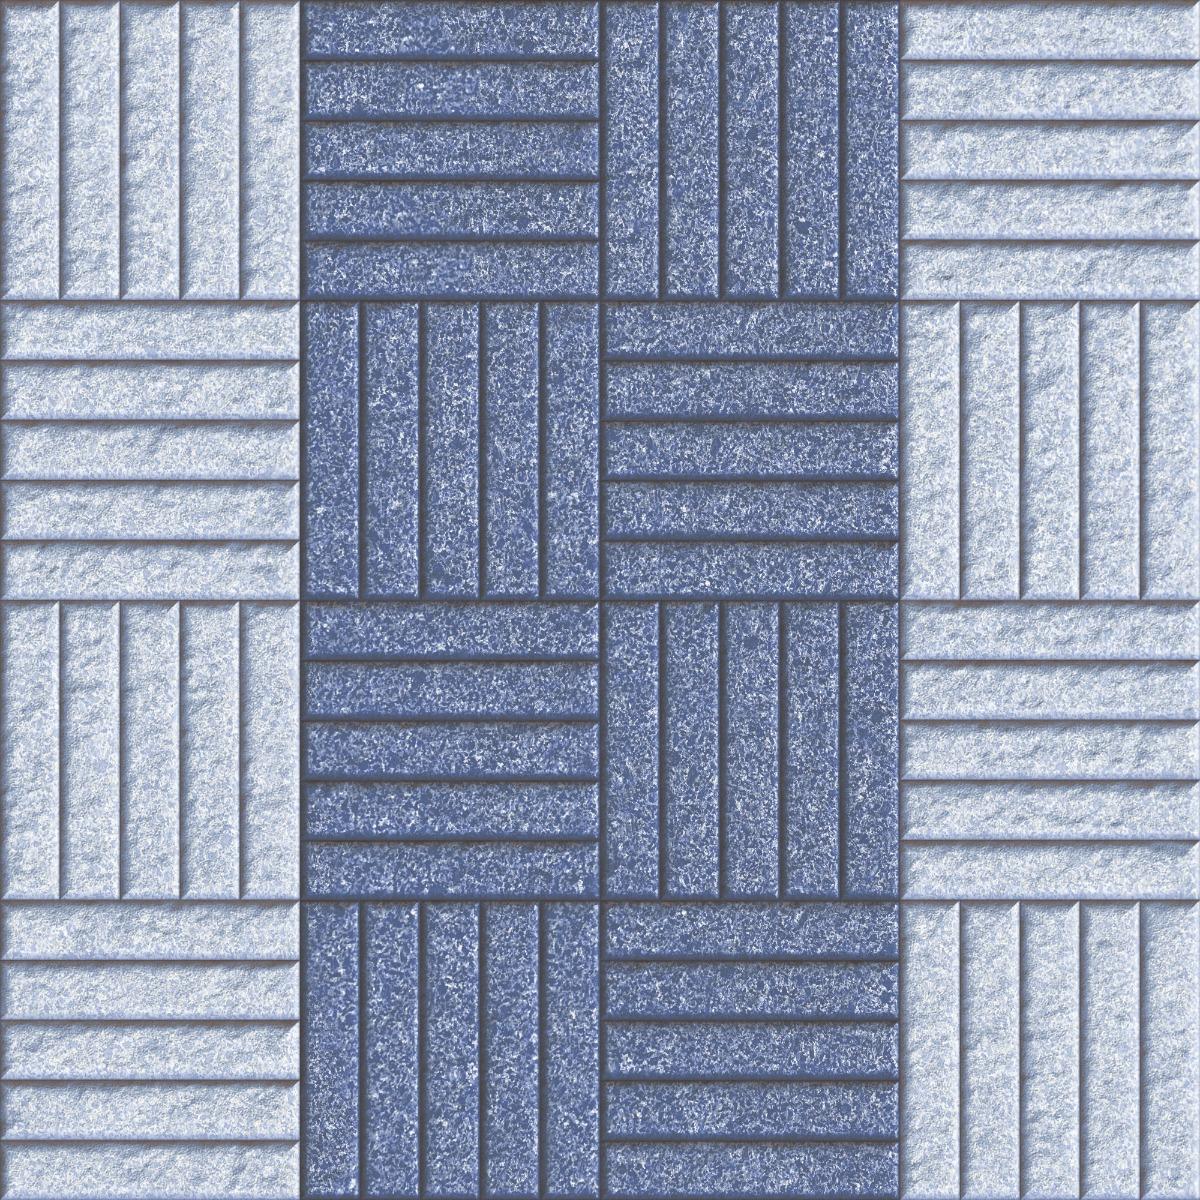 Commercial Tiles for Commercial Tiles, Parking Tiles, Office Tiles, Pathway Tiles, Hospital Tiles, High Traffic Tiles, Bar/Restaurant, Outdoor Area, Porch/Parking